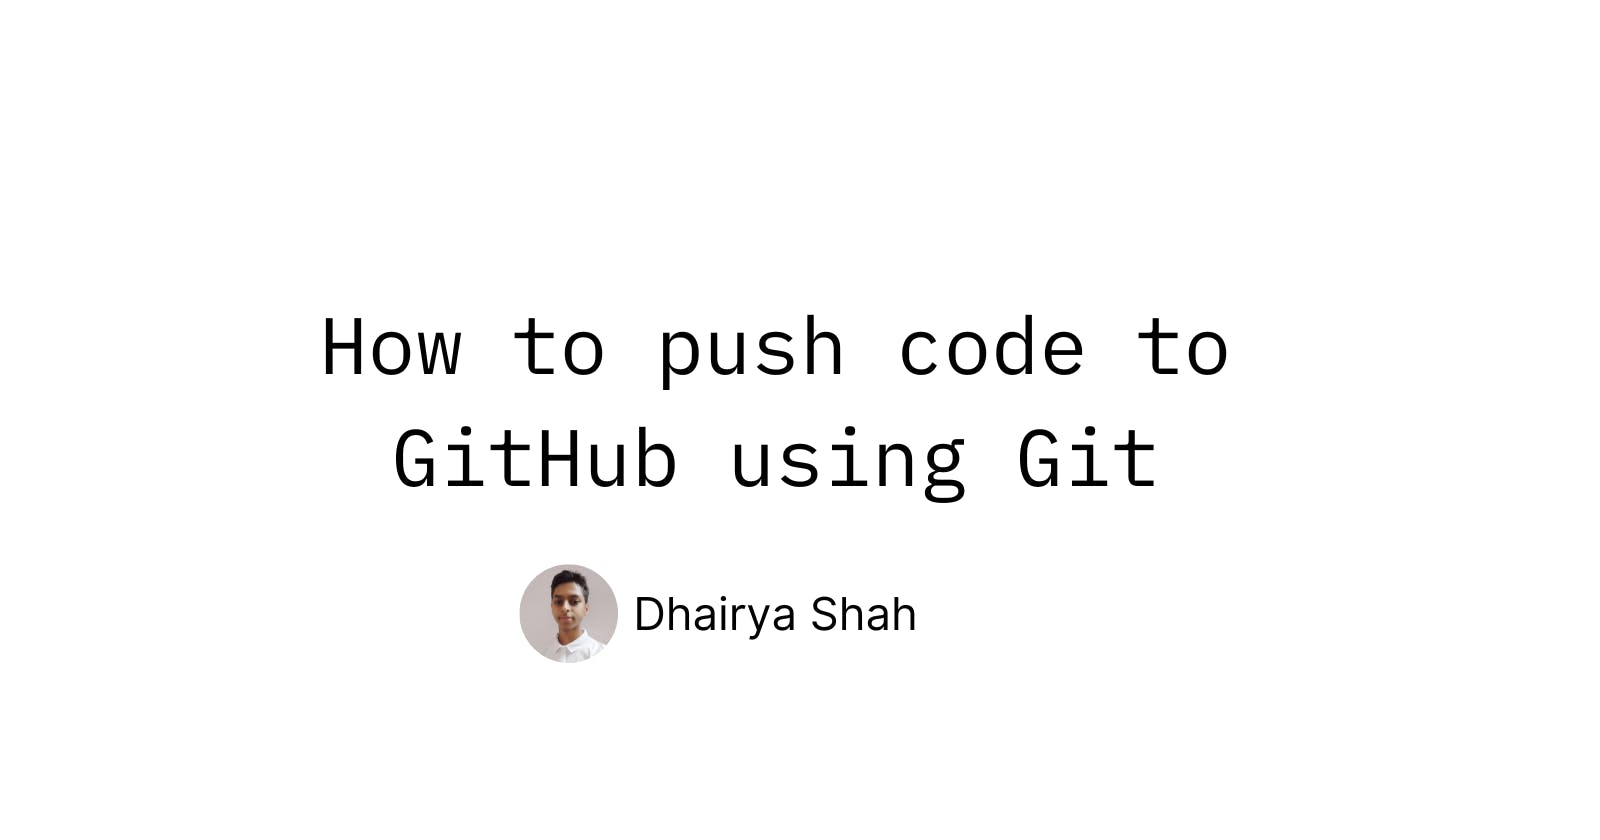 How to push code to GitHub using Git